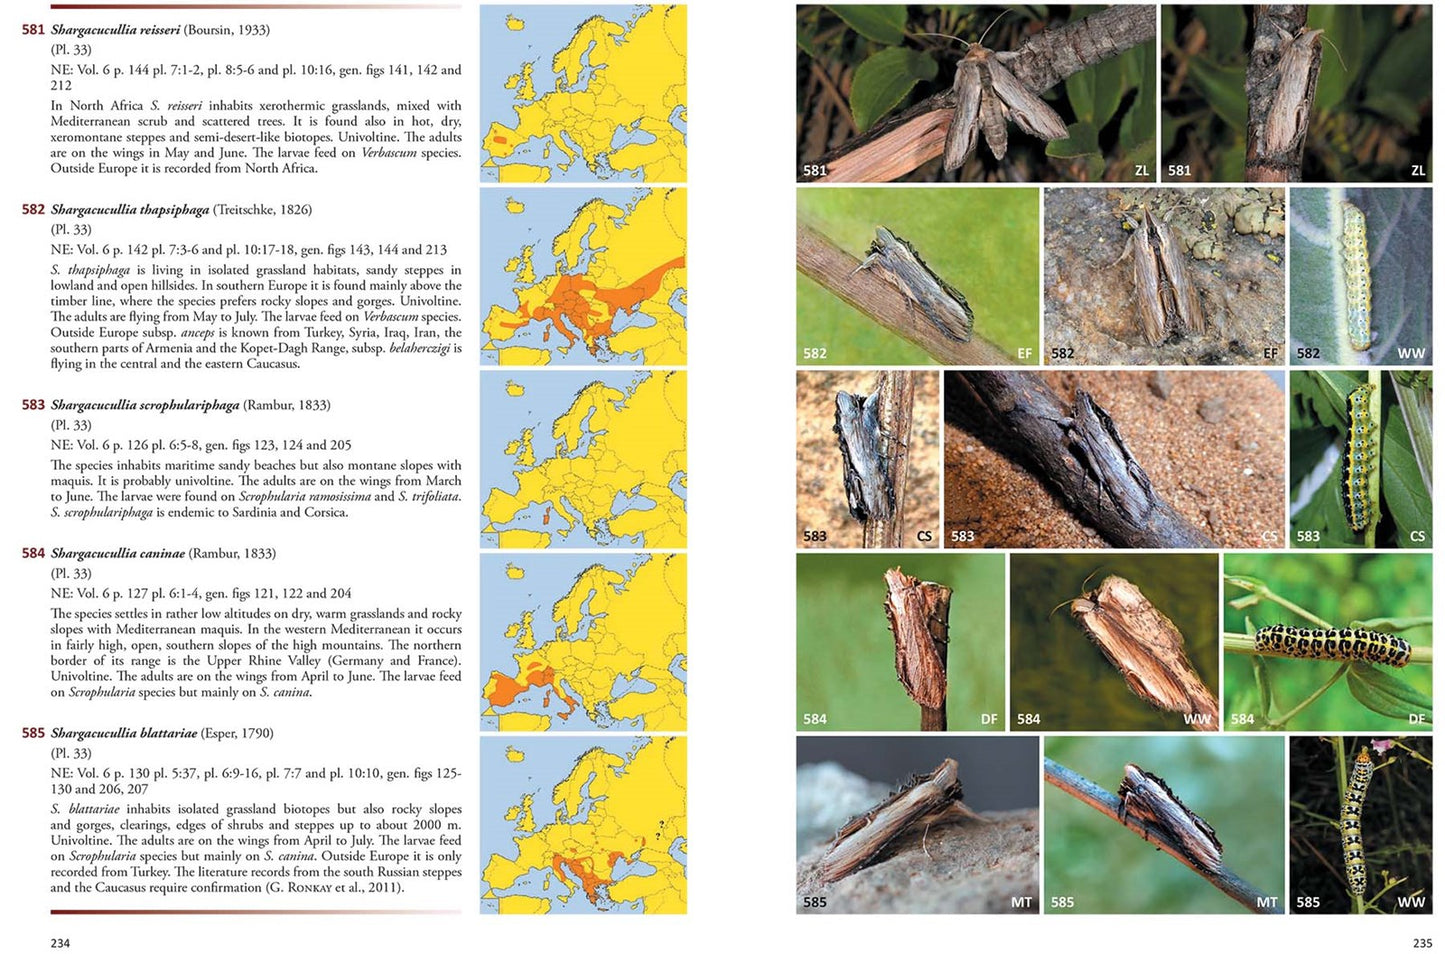 Noctuidae Europaeae Essential ·· Komplet værk over europæiske ugler